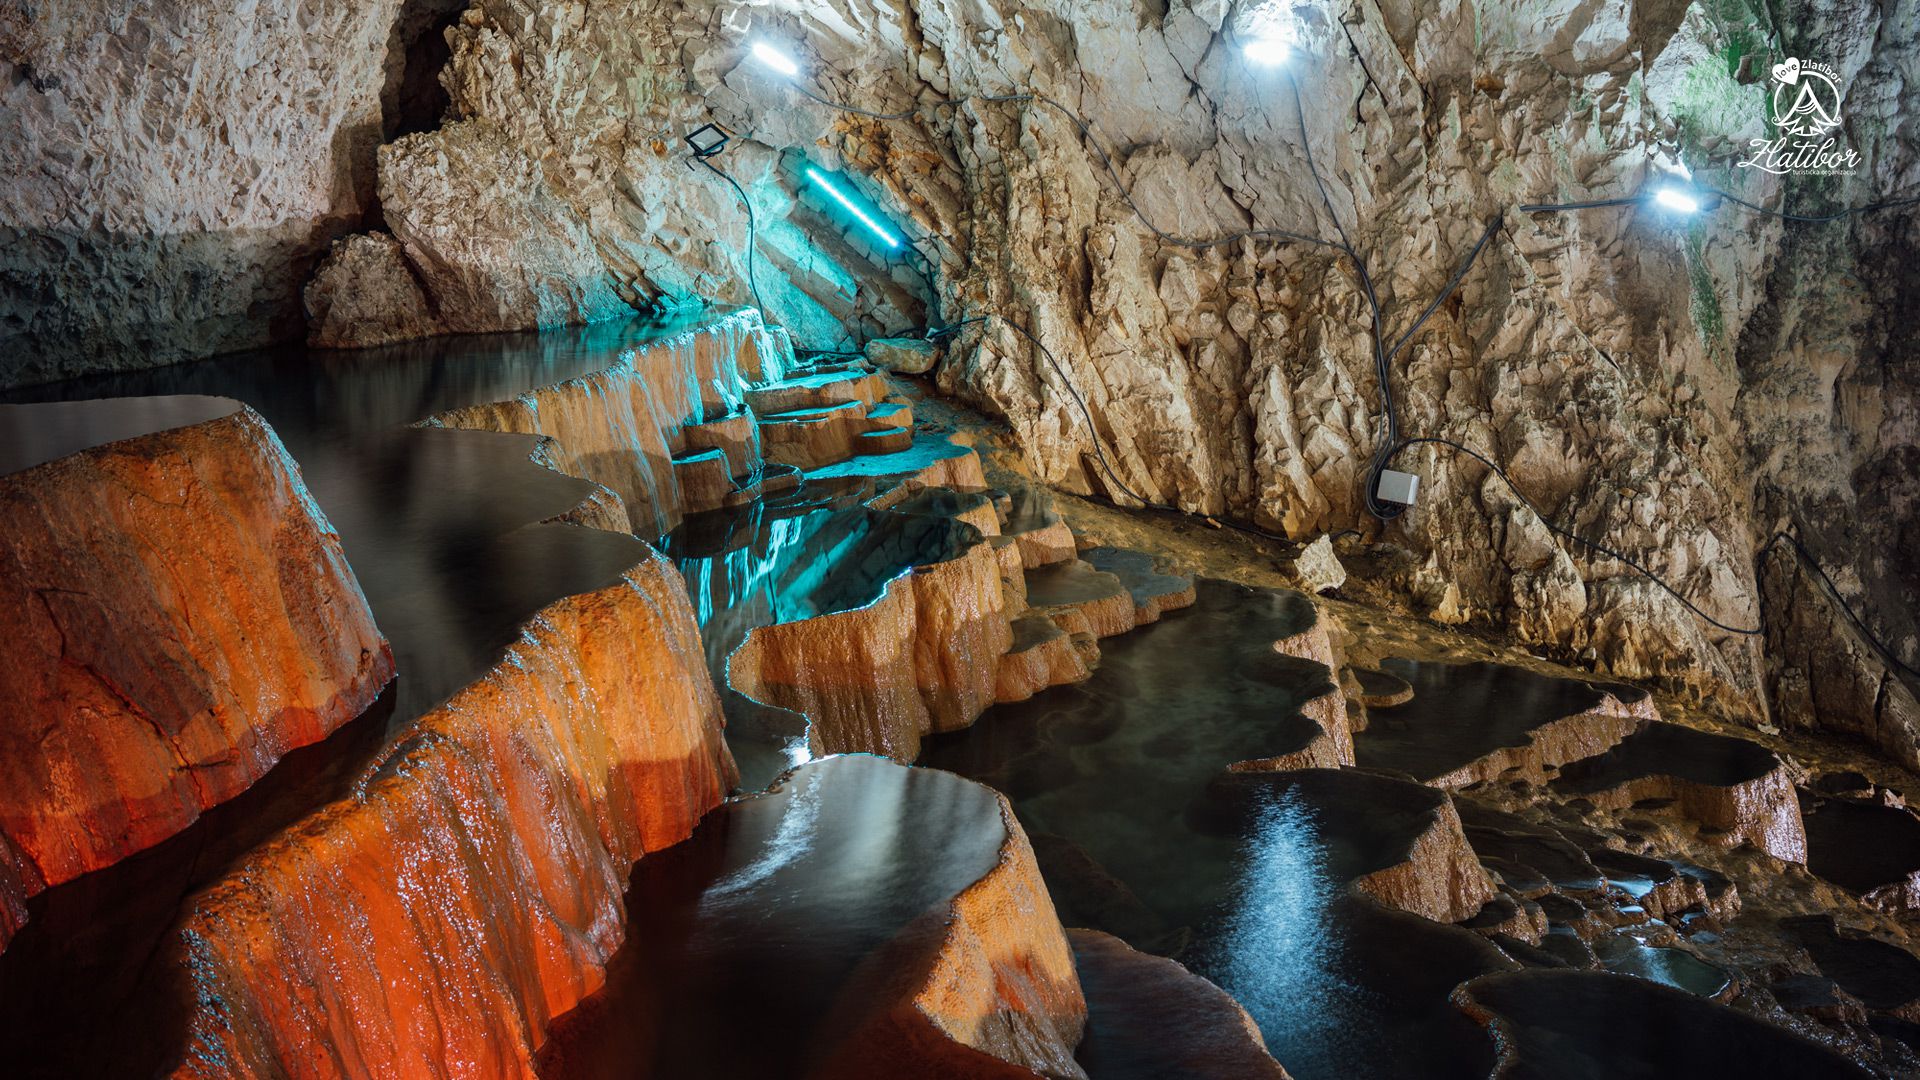 The Potpeće cave